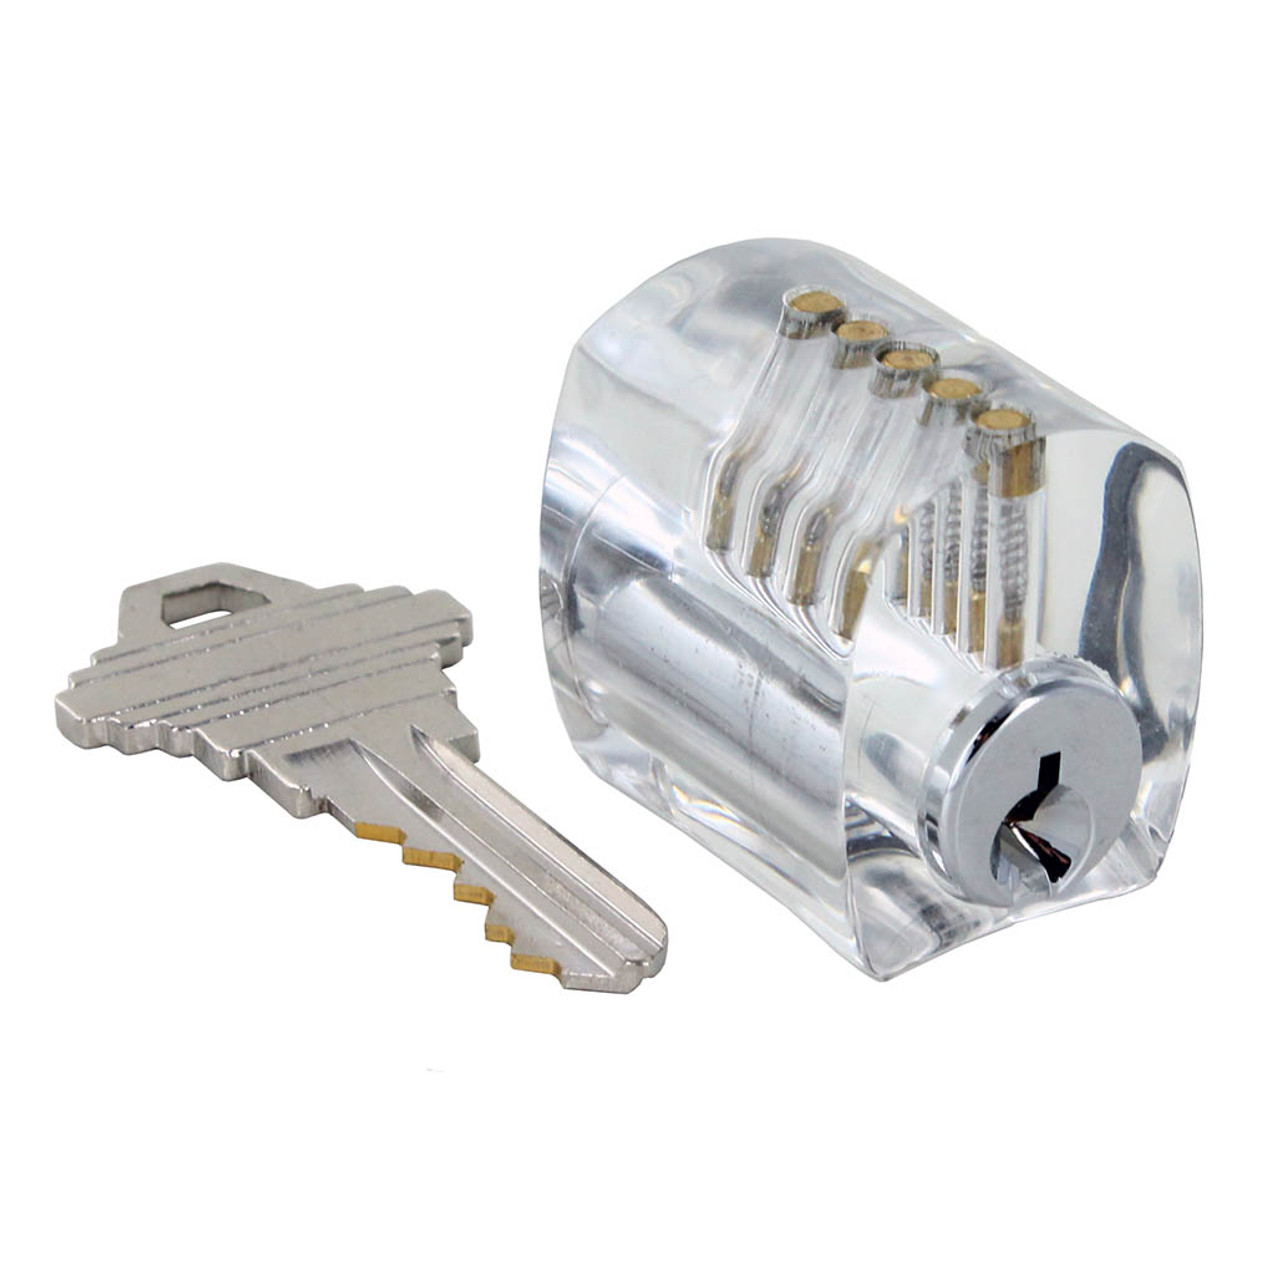 Clear Lock Picking Practice Lock, Standard Pins